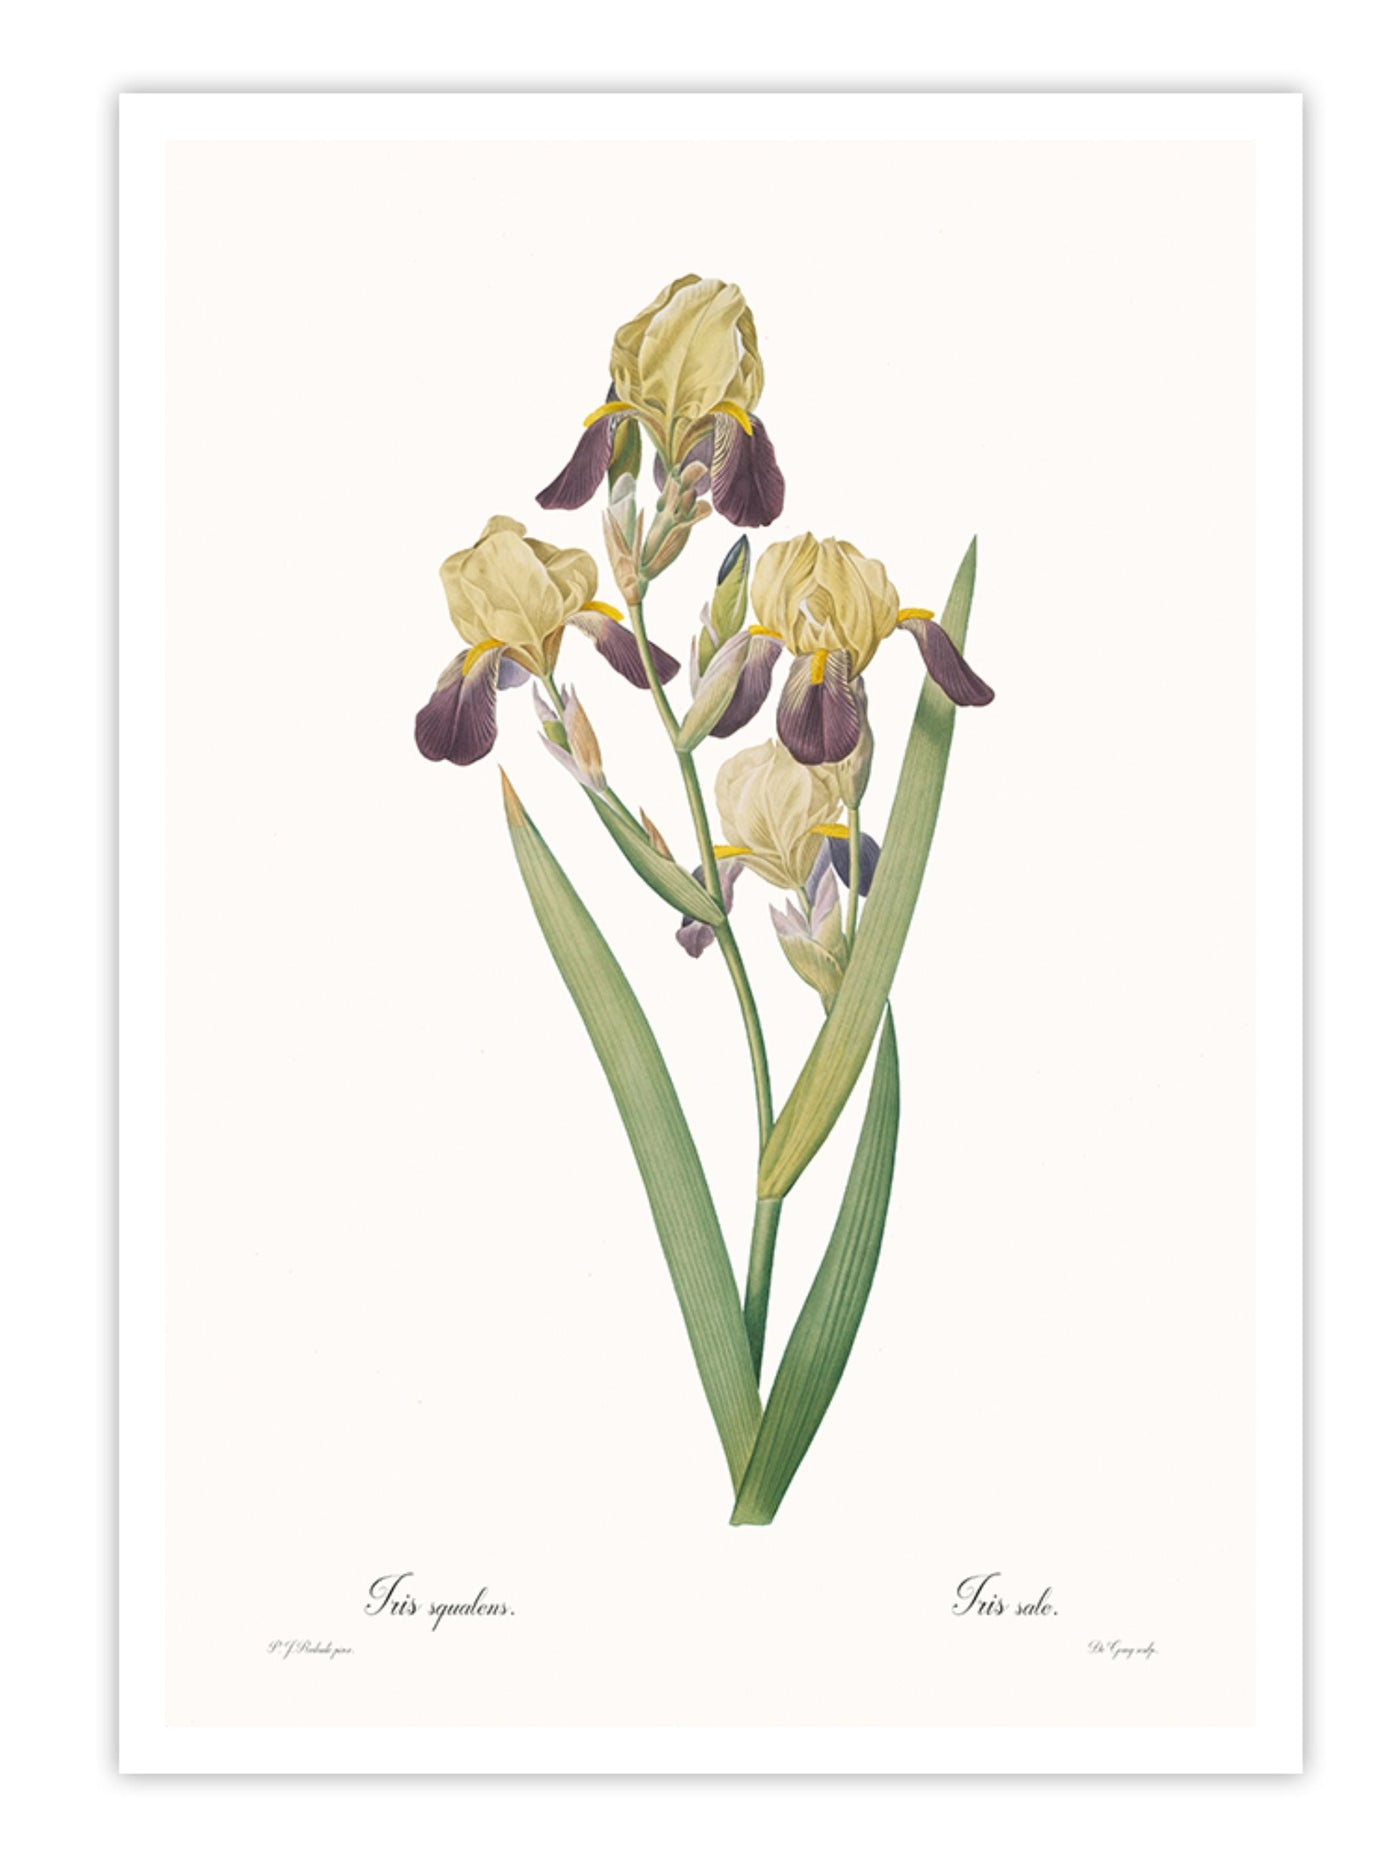 Iris squalens Wall Prints